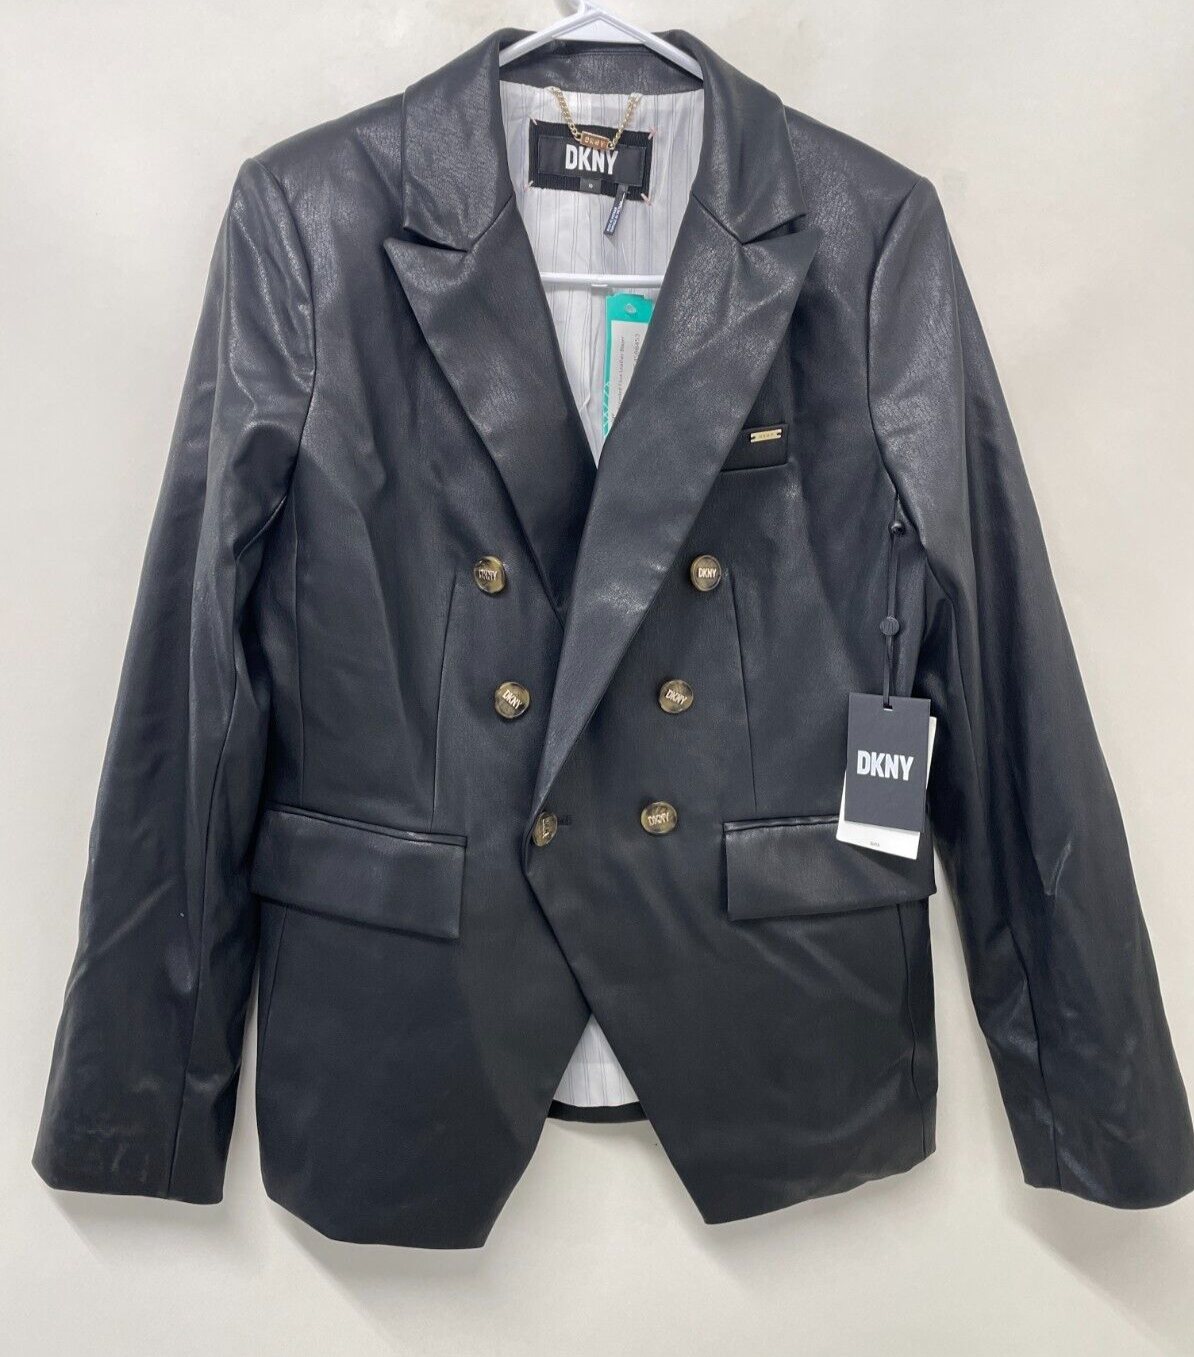 DKNY Womens 10 Double-Breasted Faux Leather Blazer Black Notch Lapel Jacket